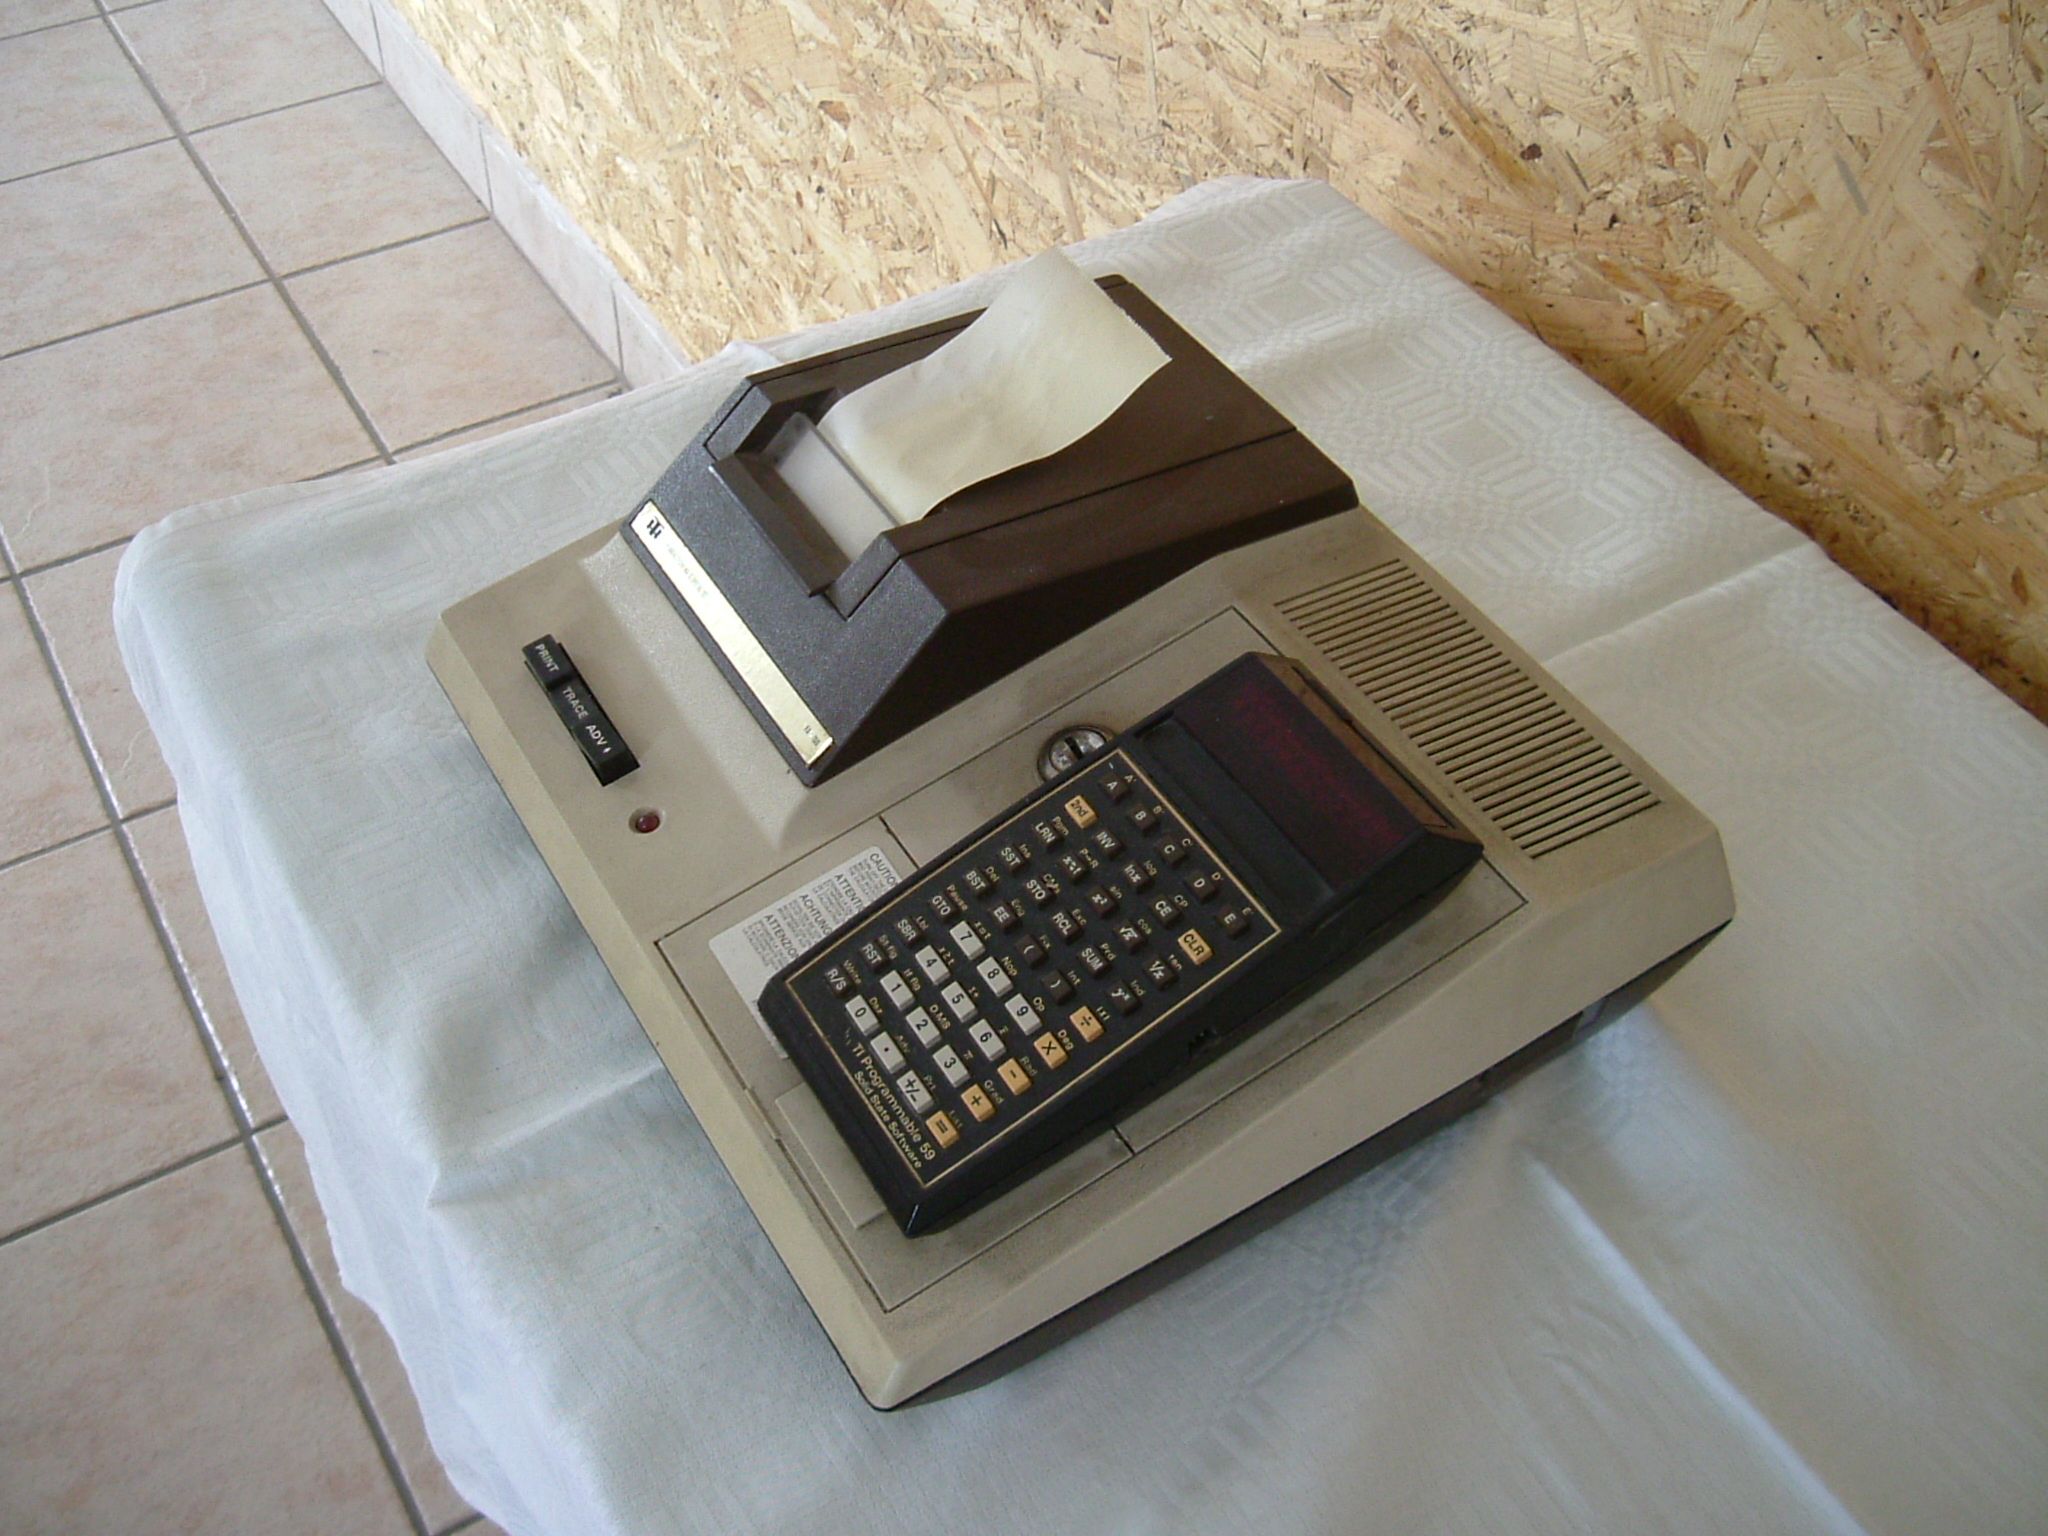 File:TI-59 printer.jpg - Wikimedia Commons